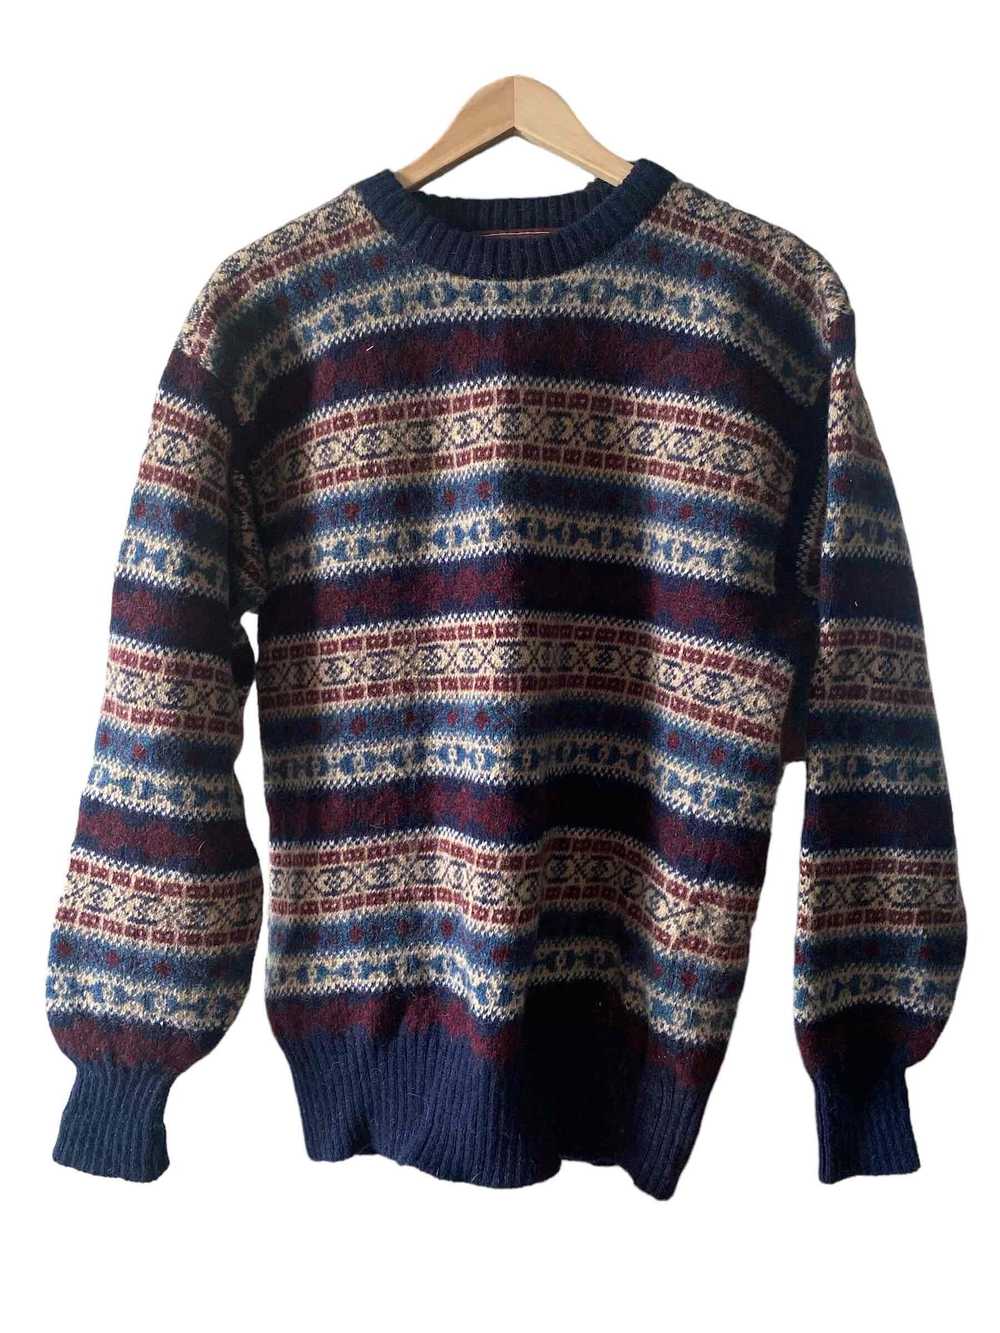 Woolen sweater - image 4